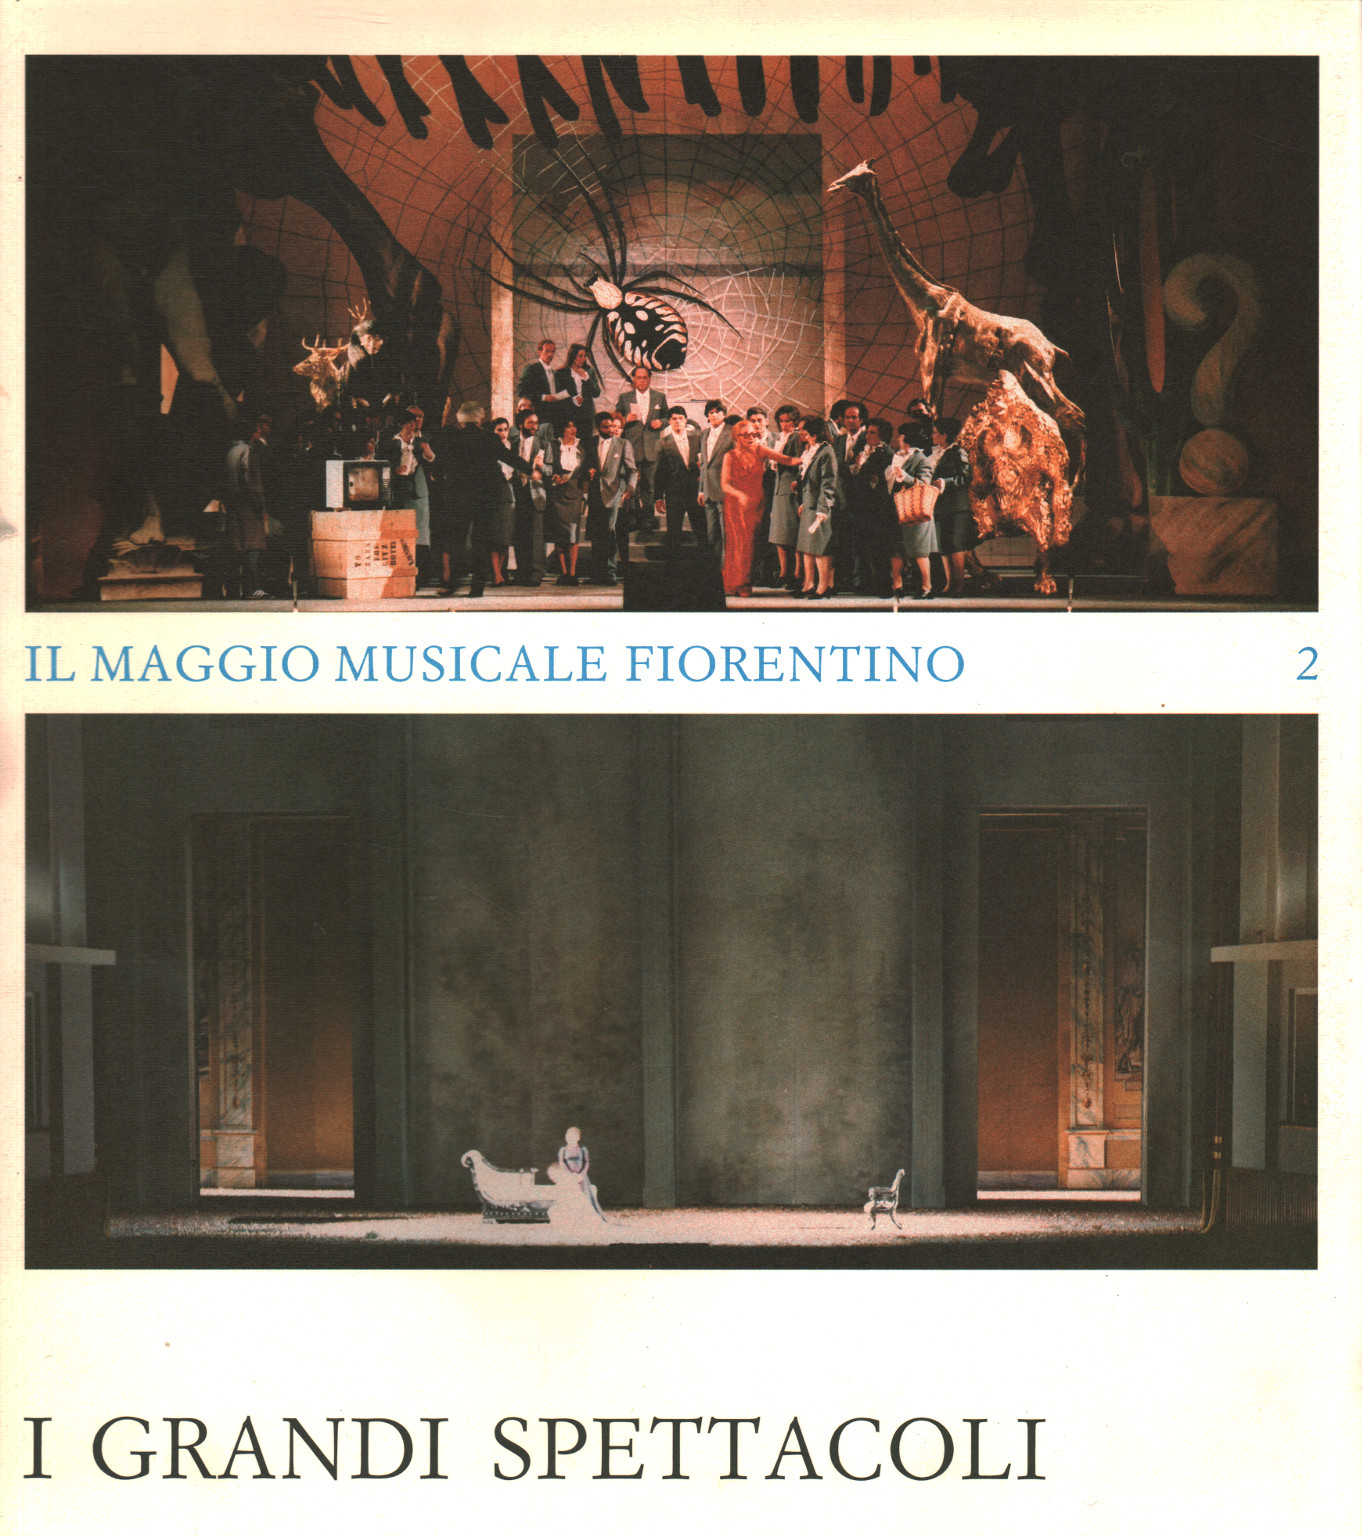 The great shows, Raffaele Monti